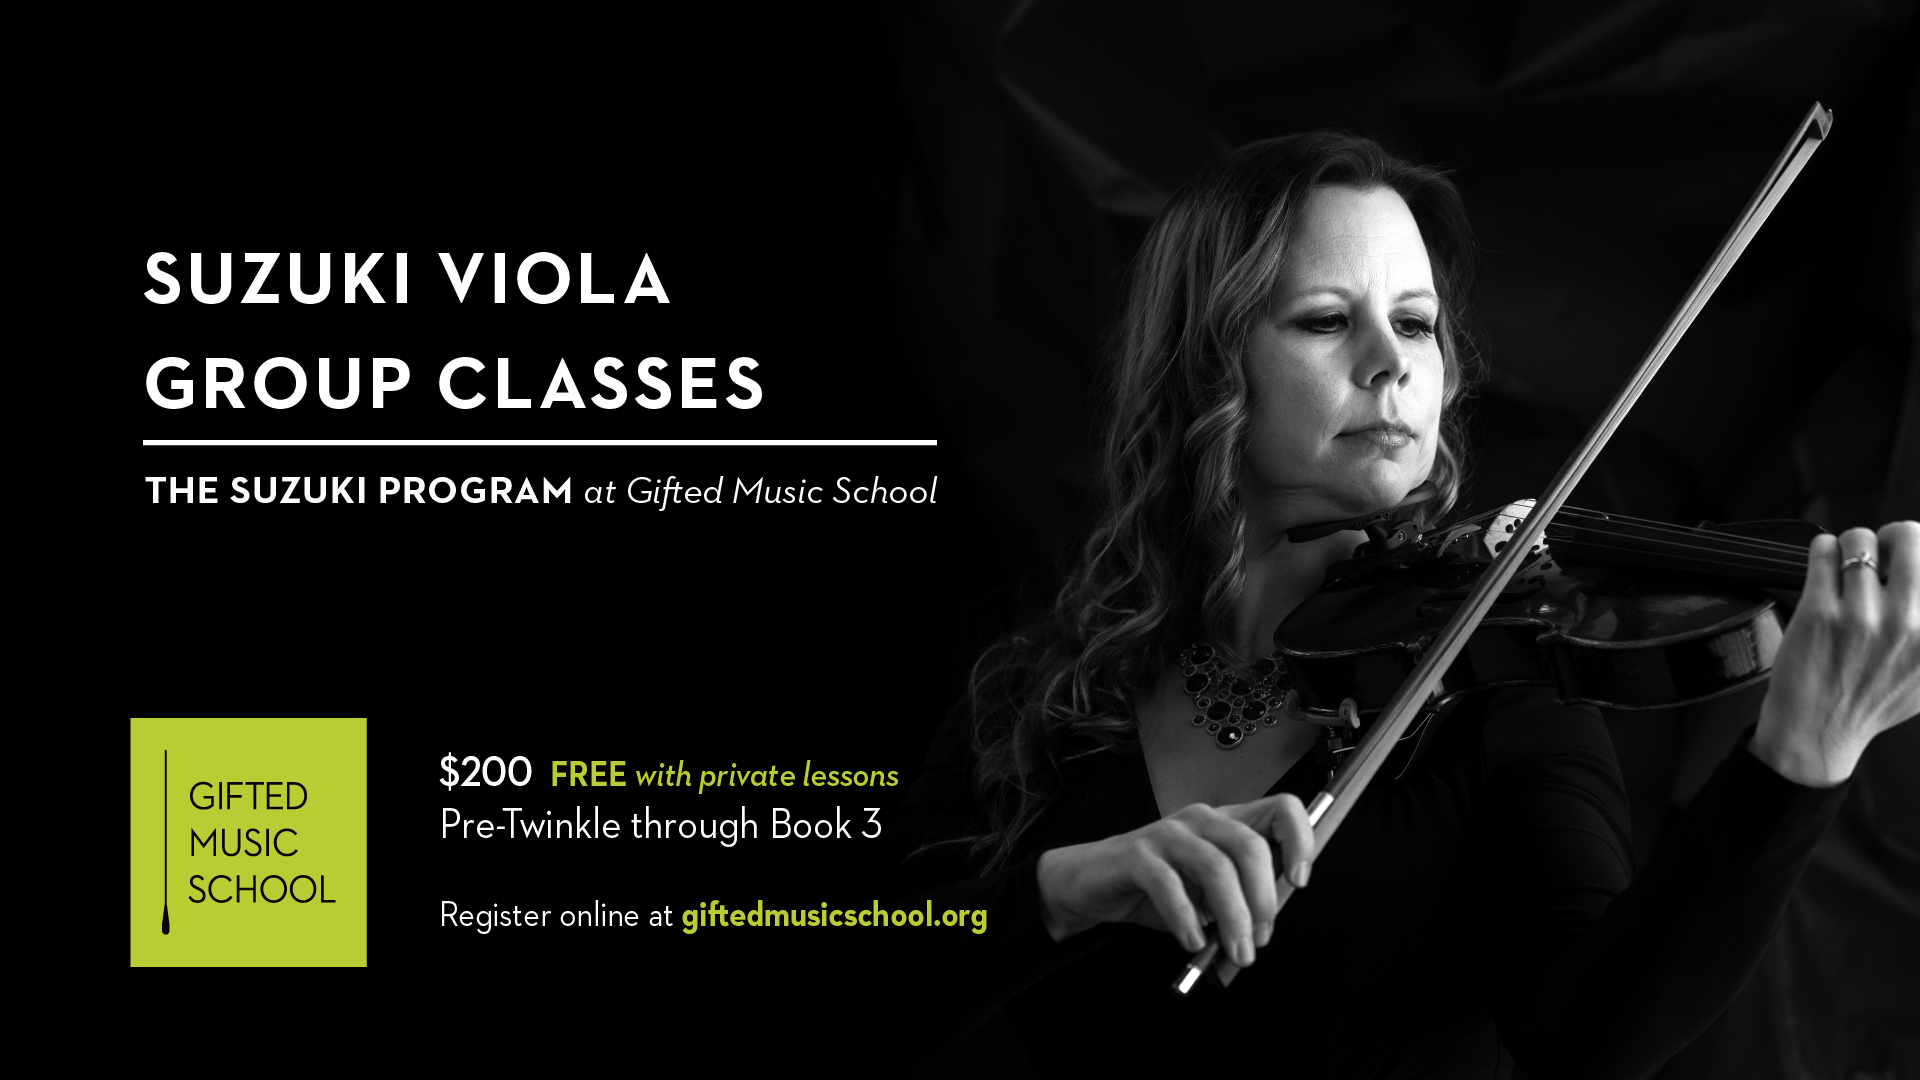 Gifted Music School Suzuki Viola Group Class Advertisement with Ms. Kristina Turner playing viola